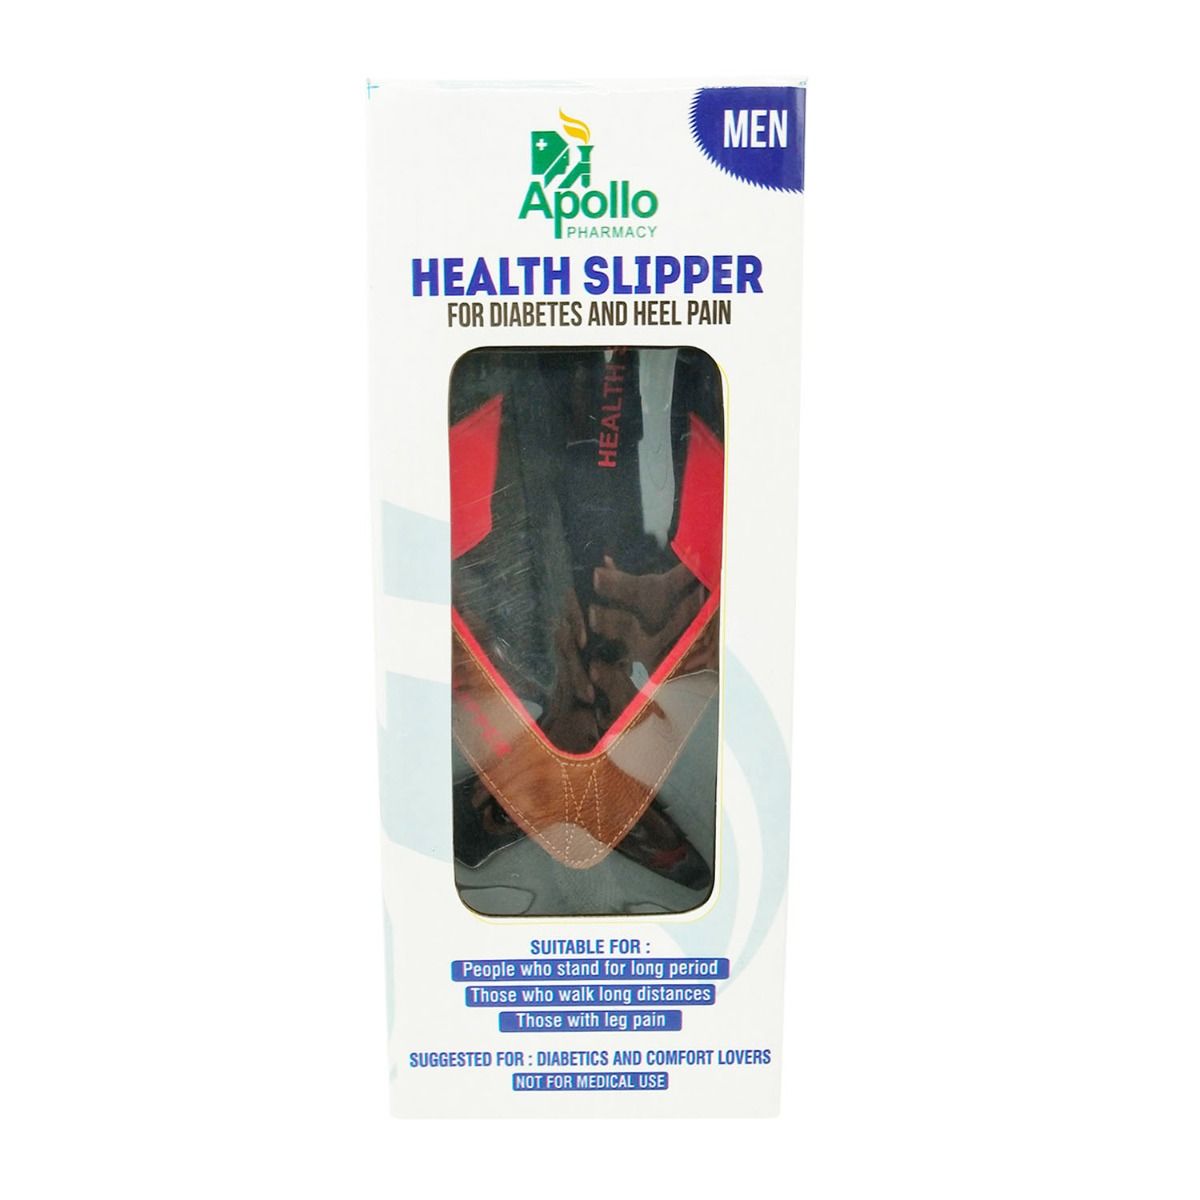 Buy Apollo Pharmacy Diabetes & Heel Pain Health Slipper For Men, Size-10, 1 Pair Online